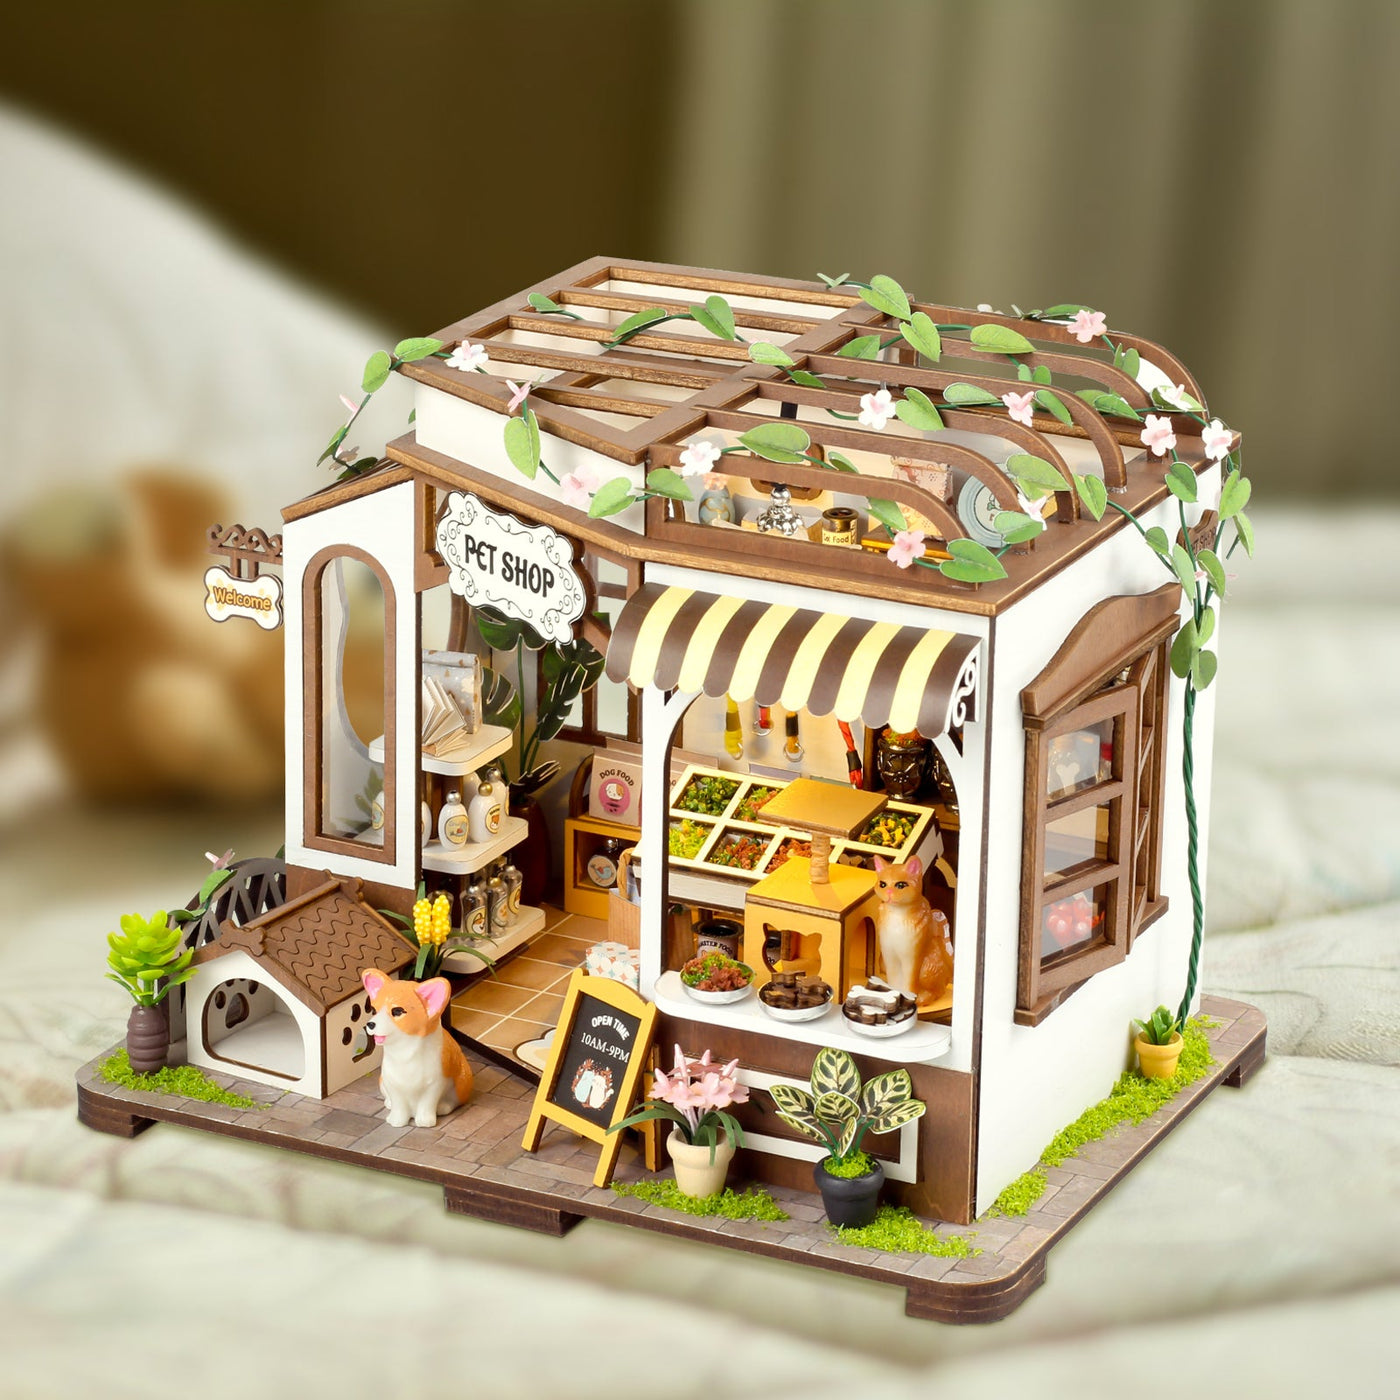 rokrgeek pet shop diy miniature house